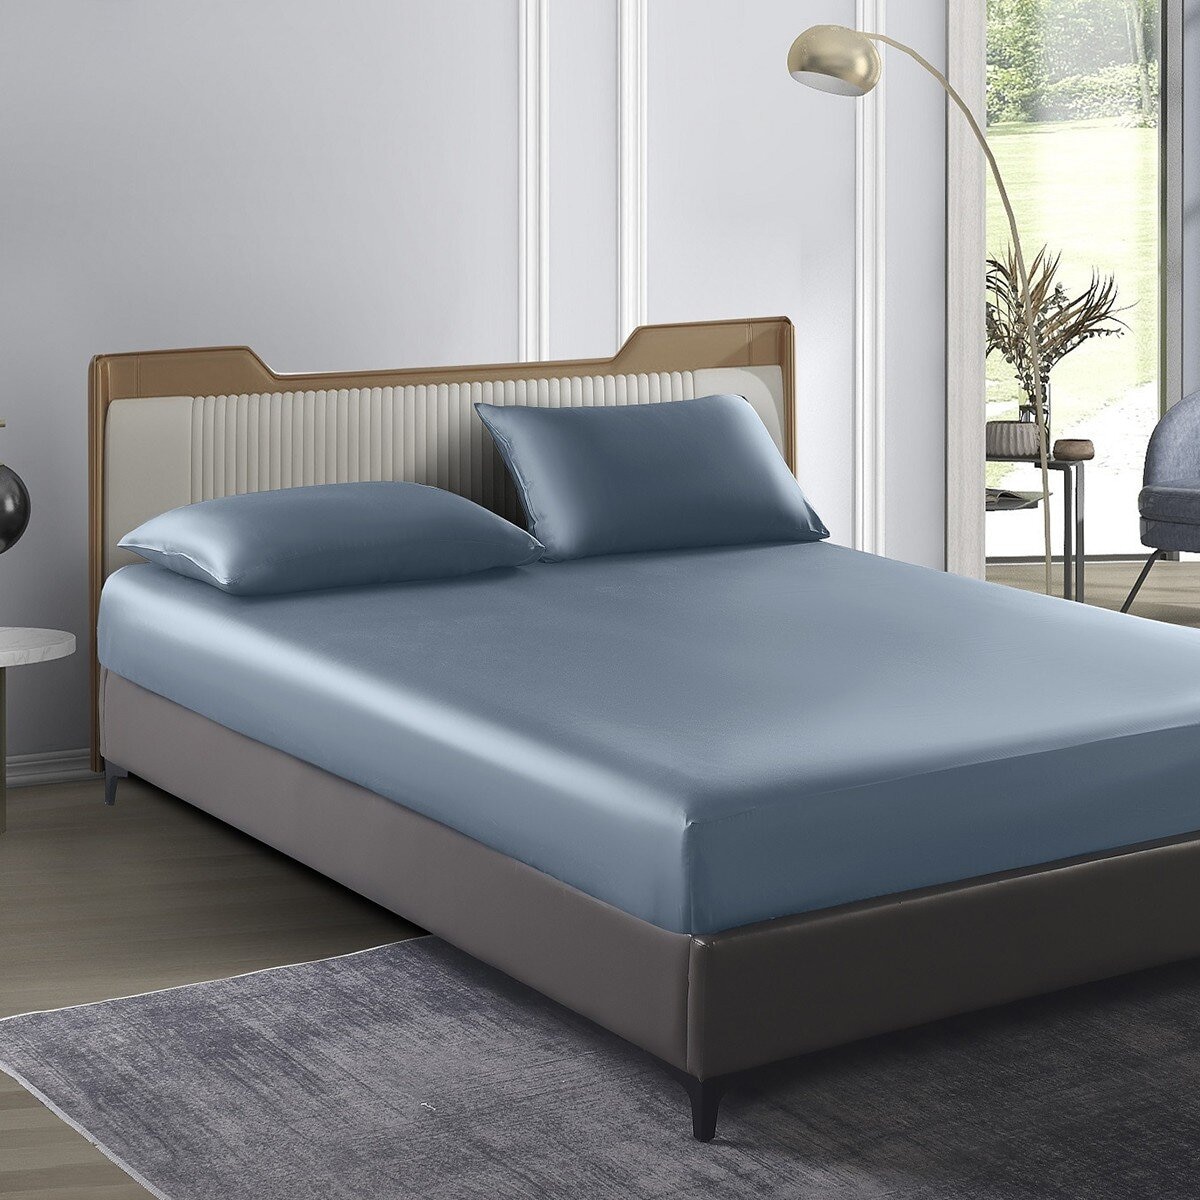 Don Home 萊賽爾素色雙人加大被套床包六件組 182公分 X 190公分 霧藍